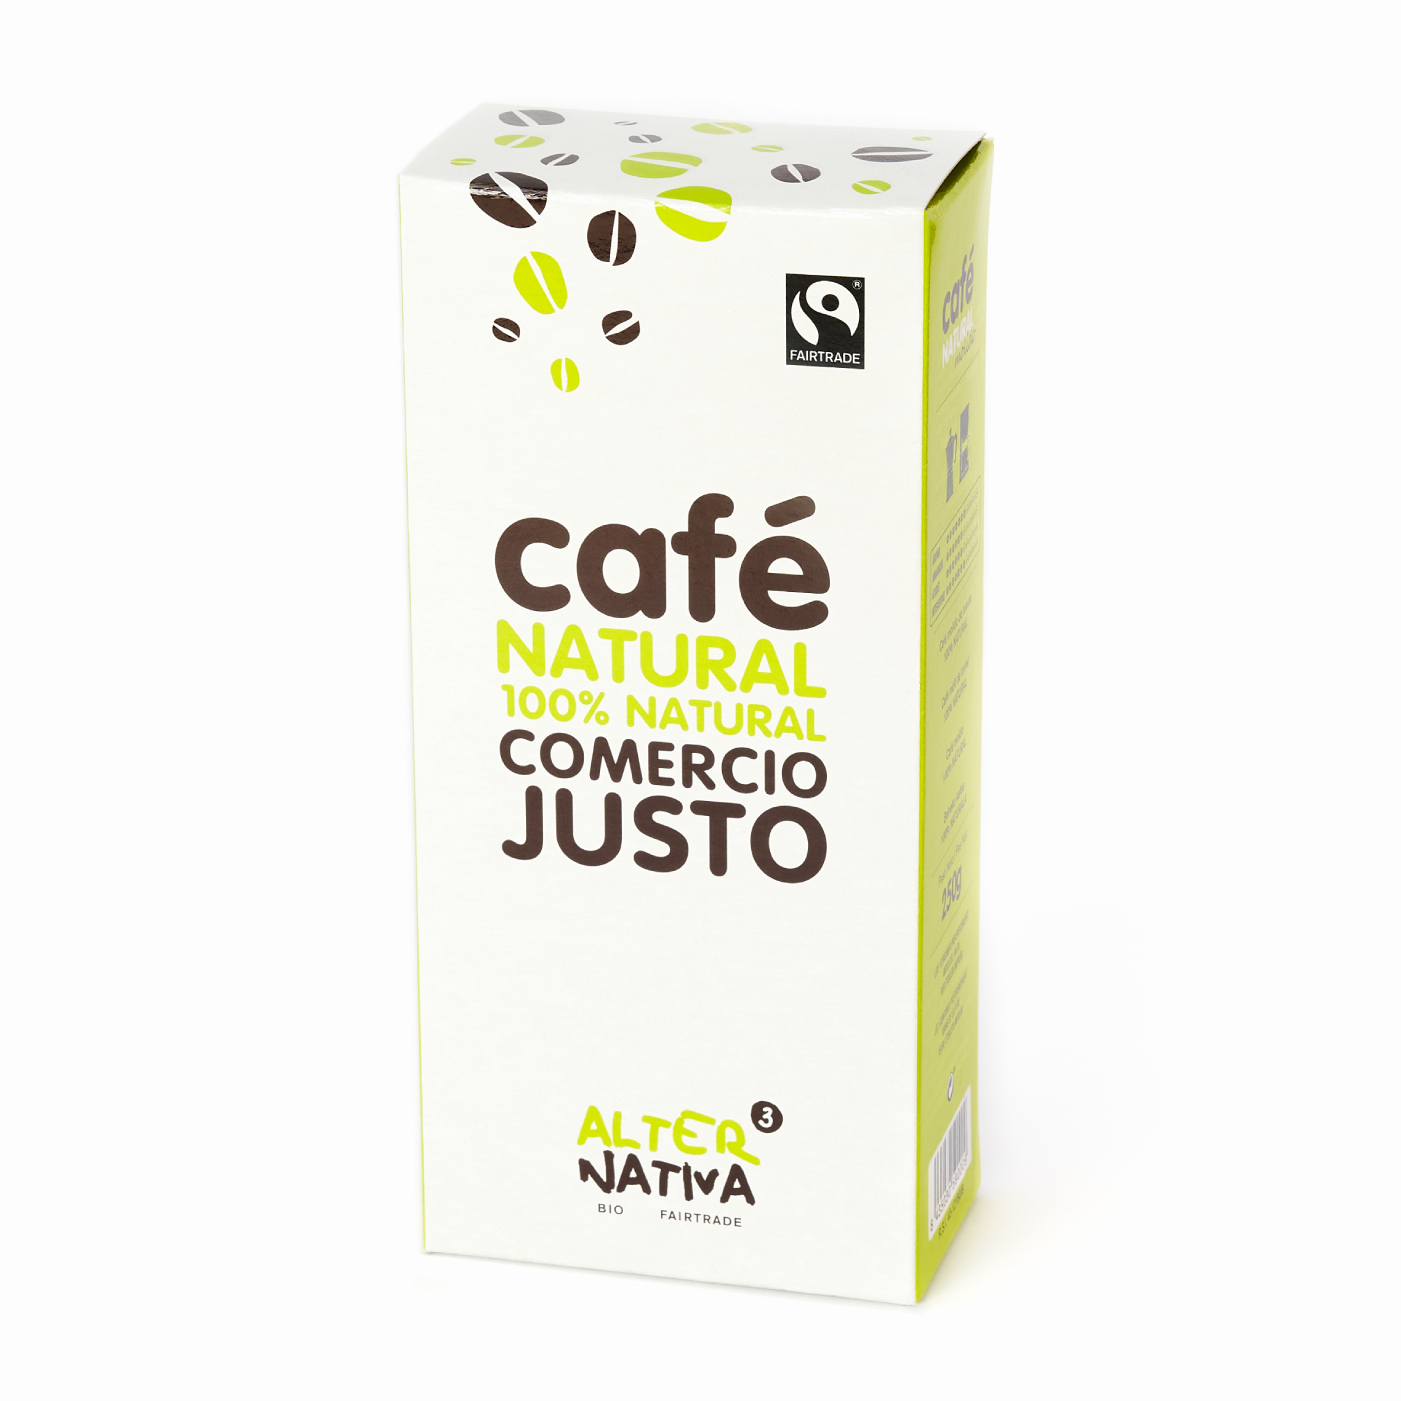 Cafe Natural - Cafénatural